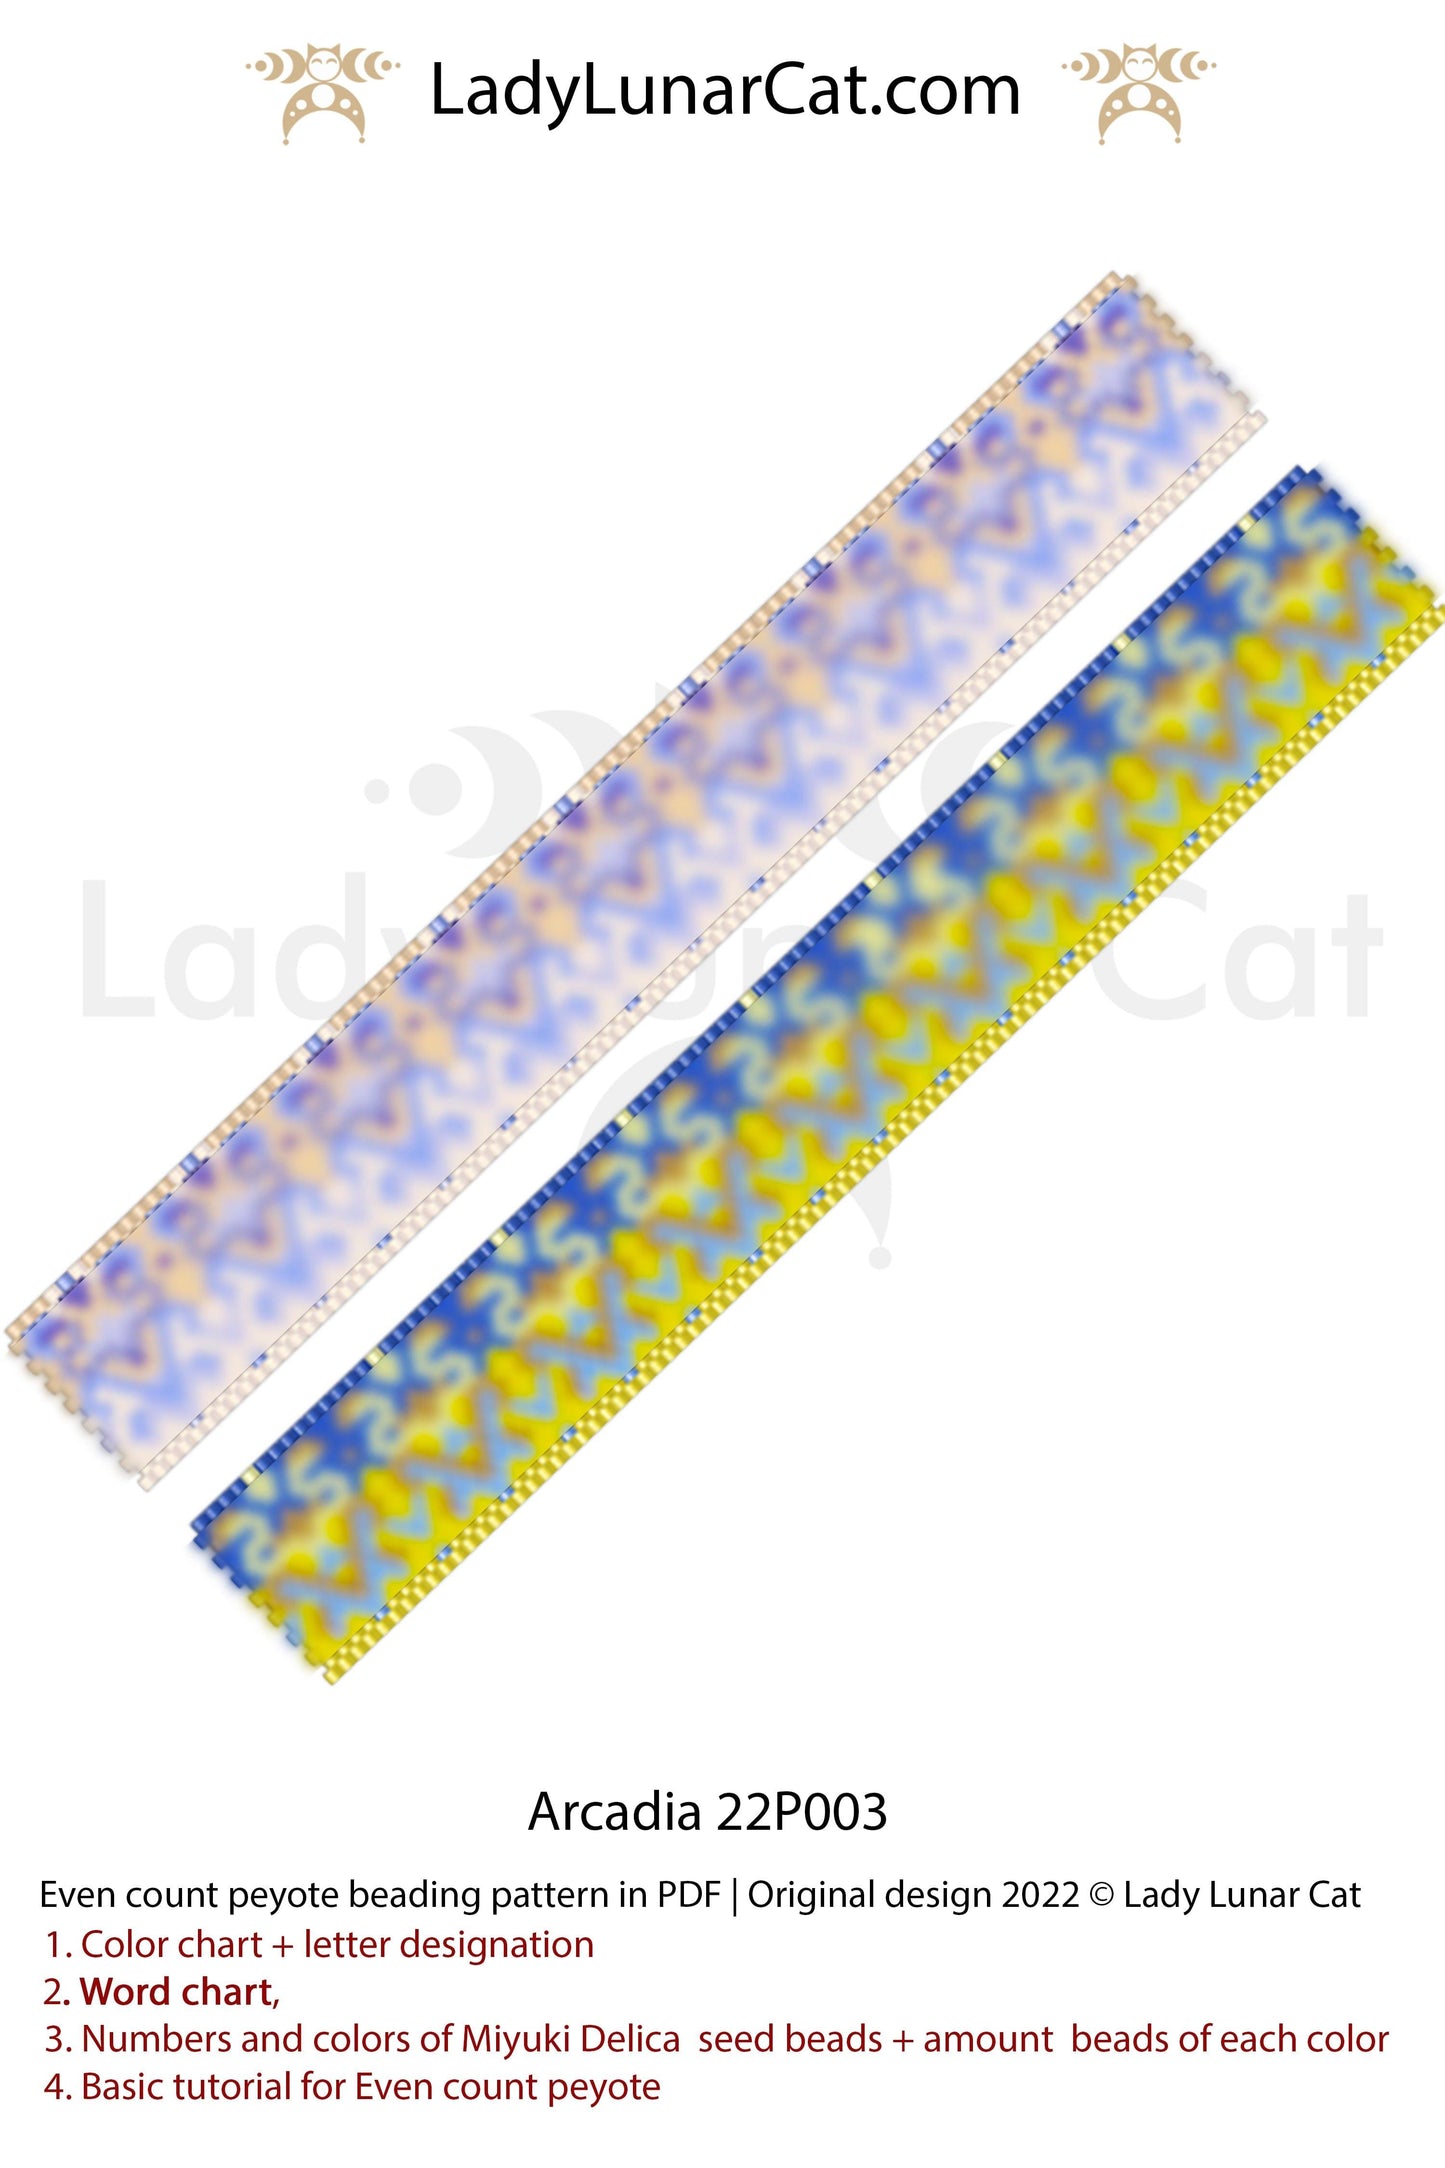 Even count peyote bracelet pattern Arcadia 22P003 LadyLunarCat